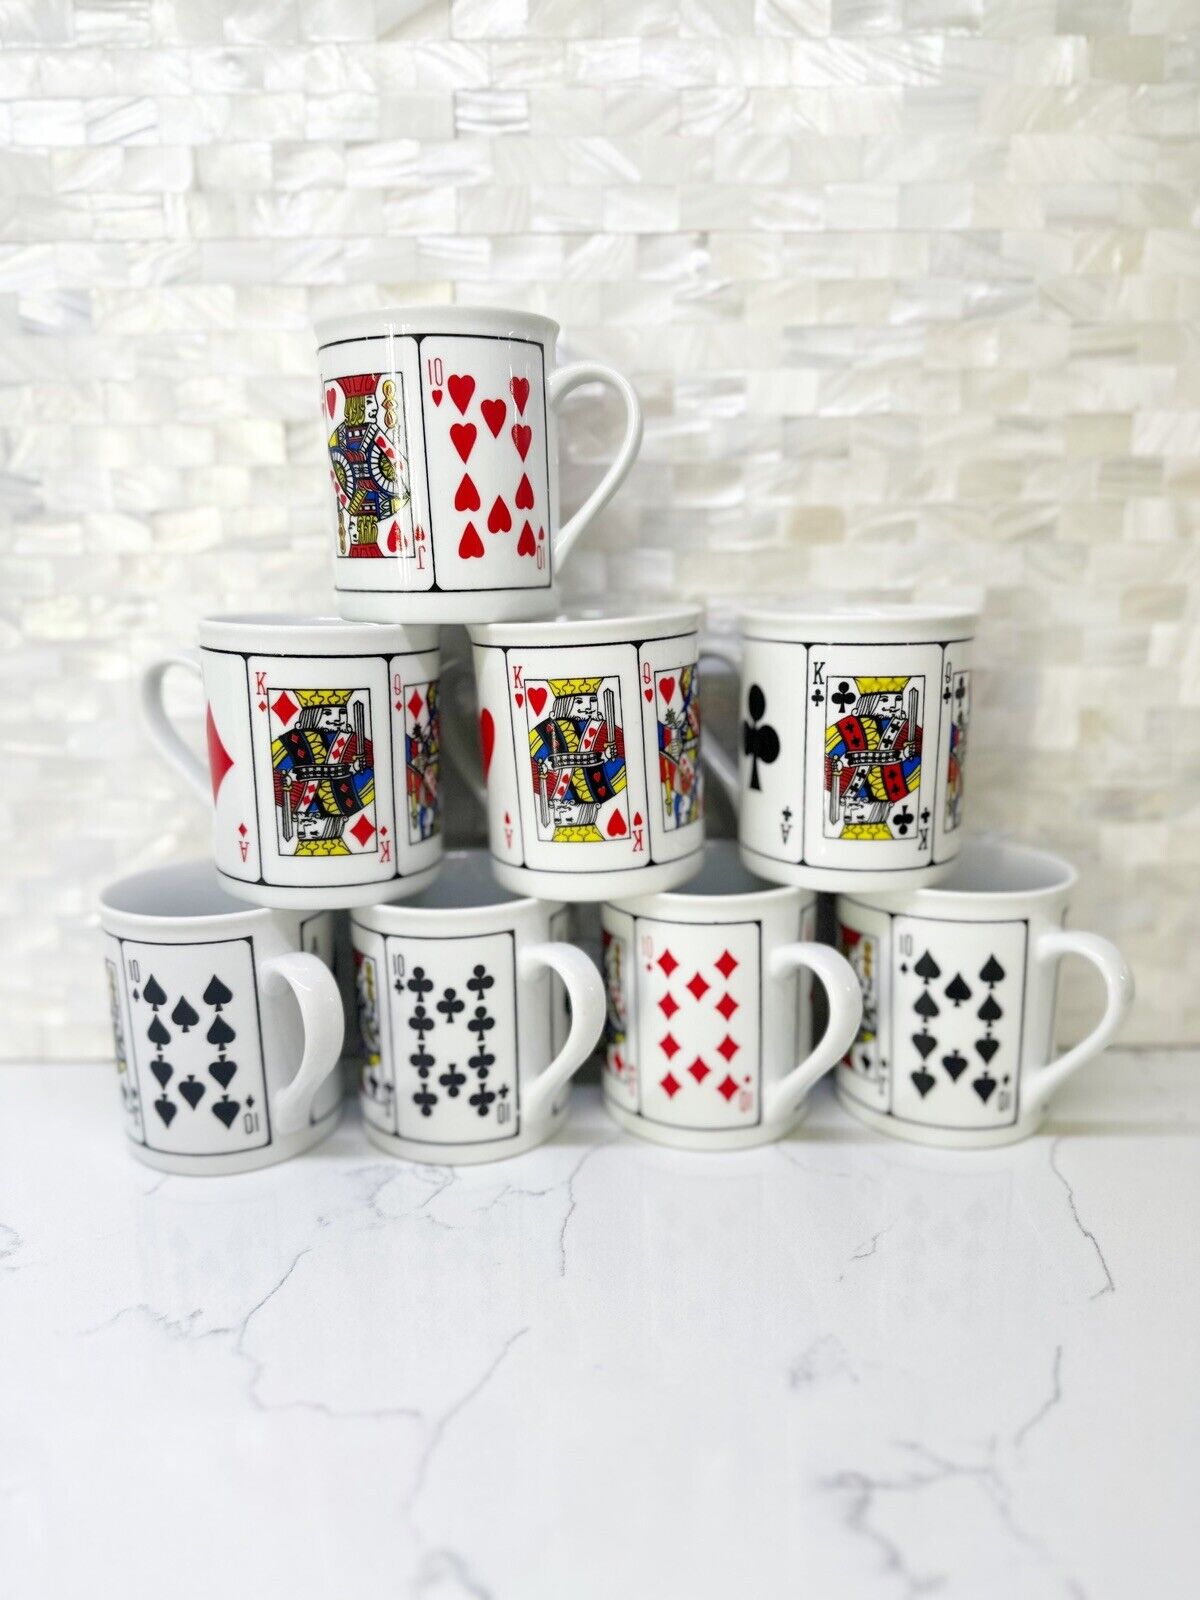 A Vintage Royal Flush Spade Playing Cards Ceramic Coffee Mug Cup Jobar Vtg Set 8